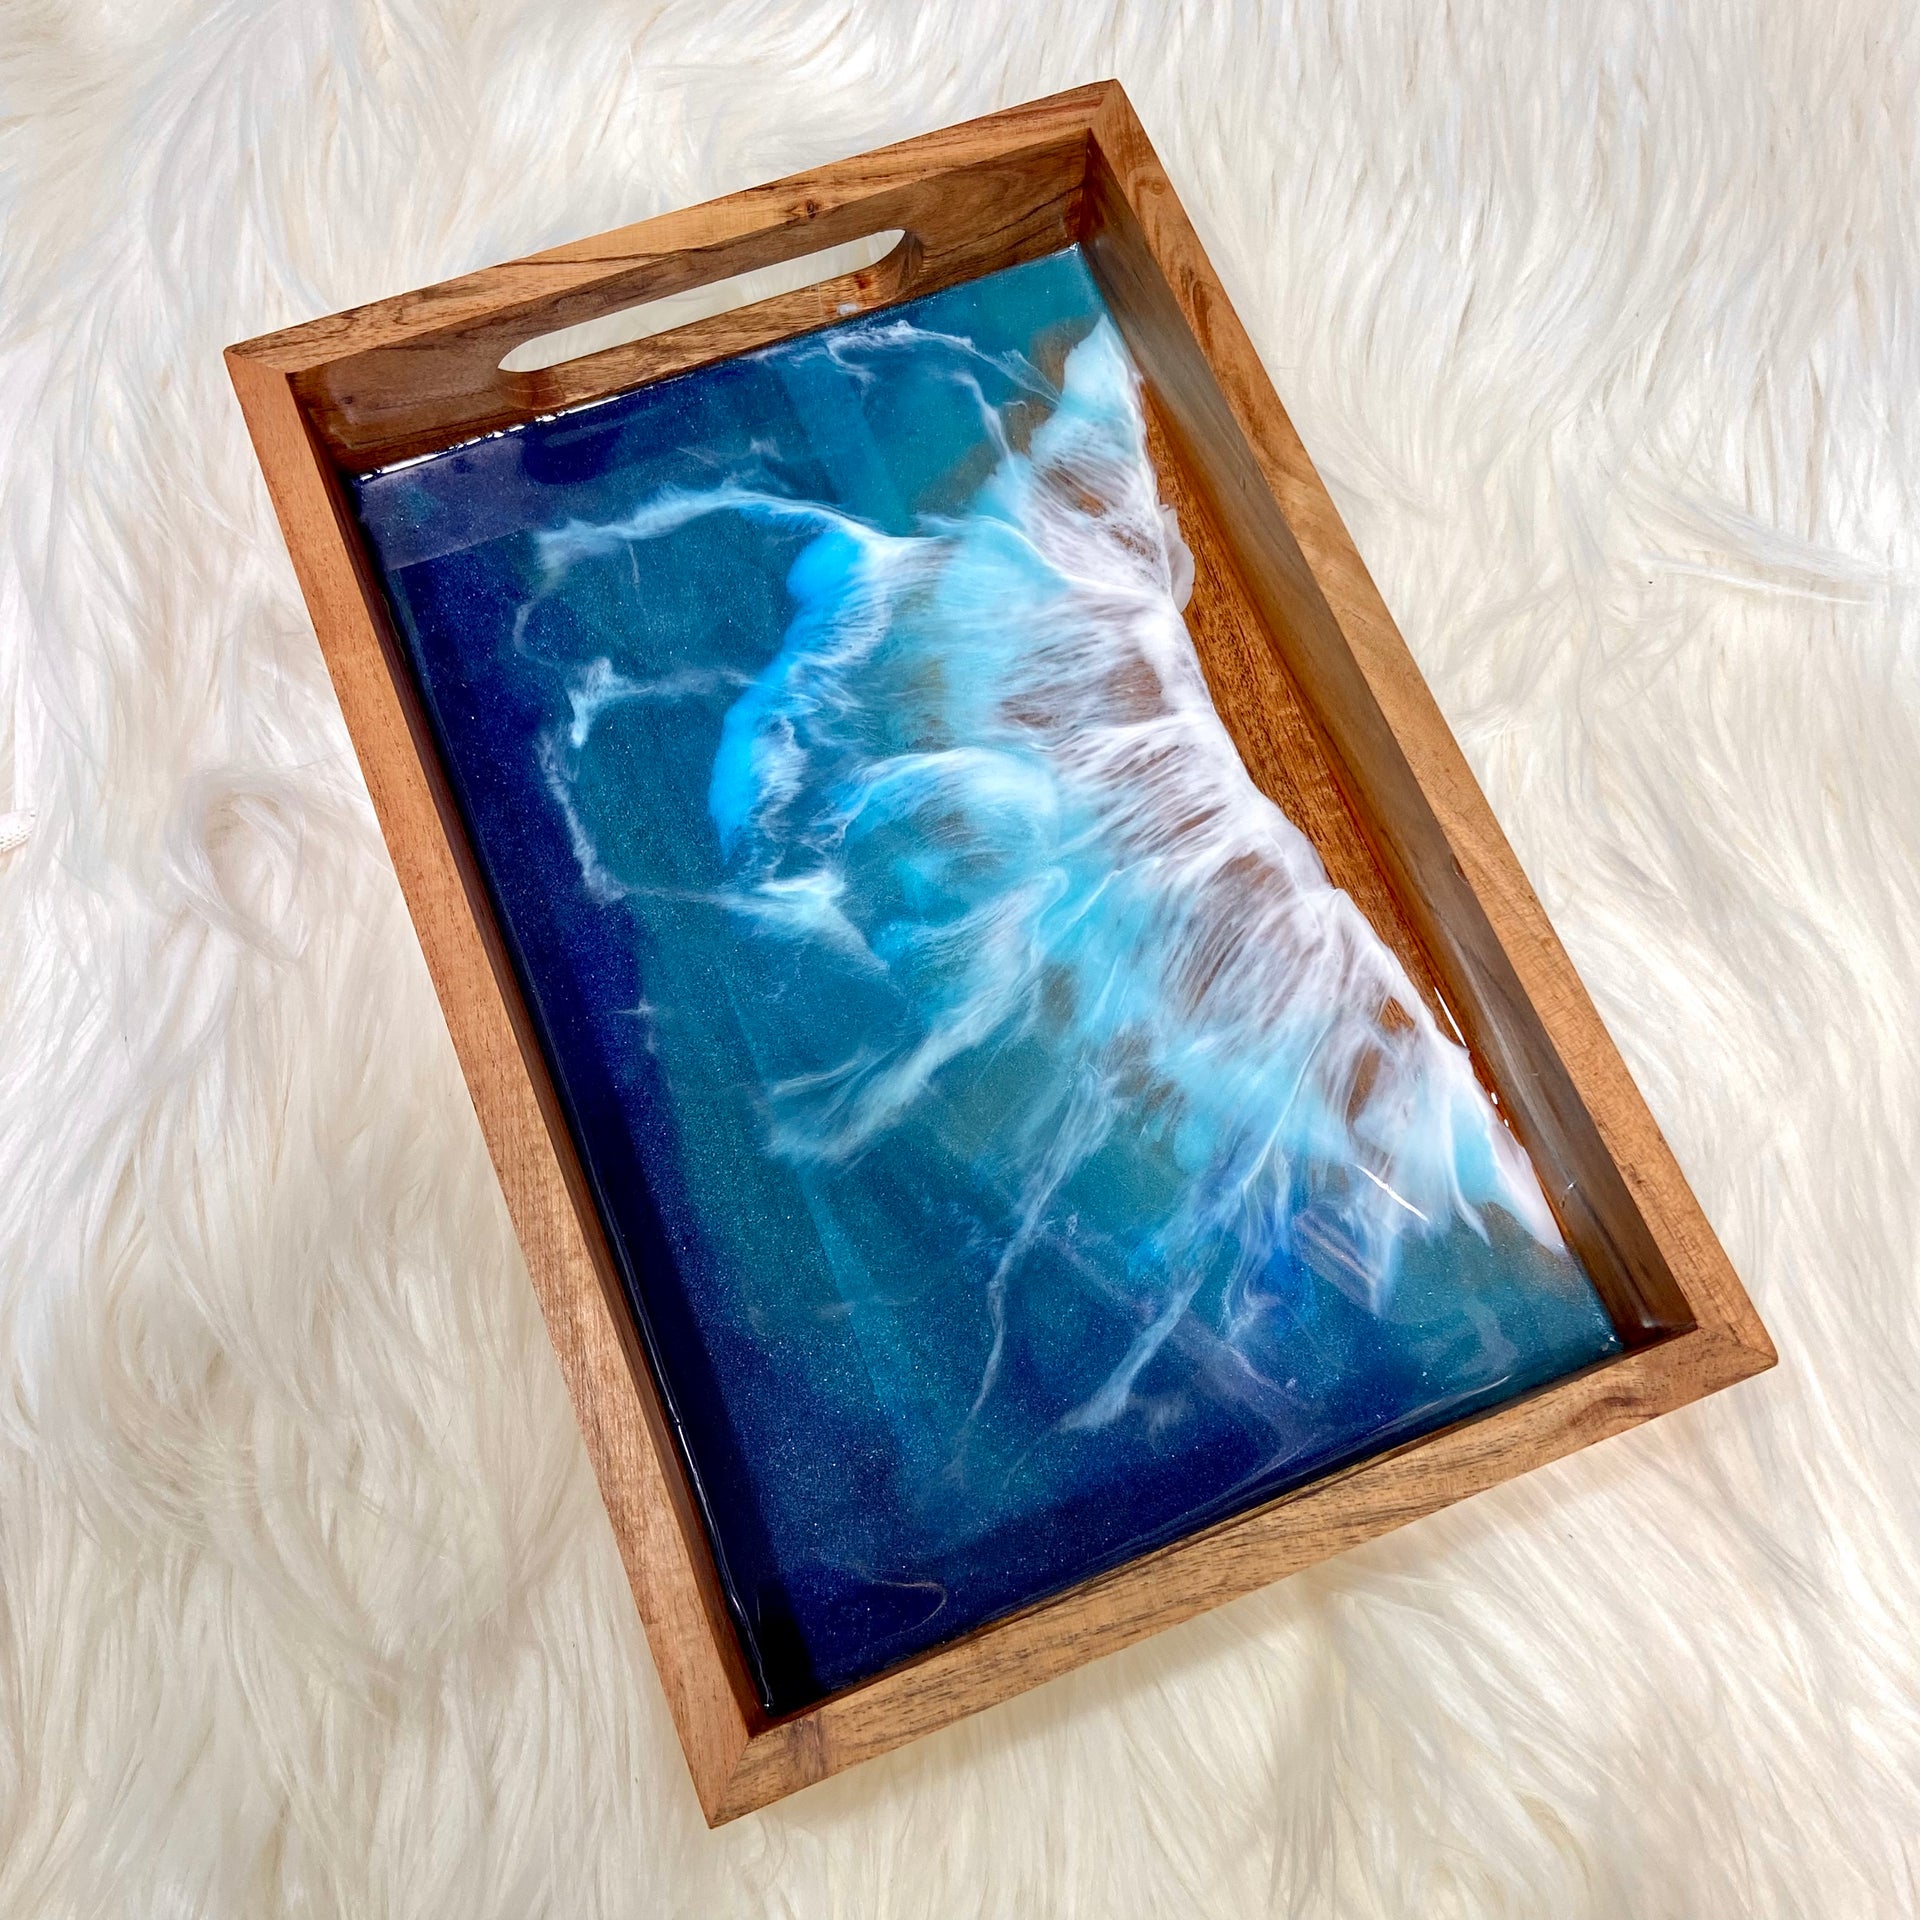 Decorative Wooden Tray Resin Pour Tutorial, Resin Art Tray, Ocean Resin Art